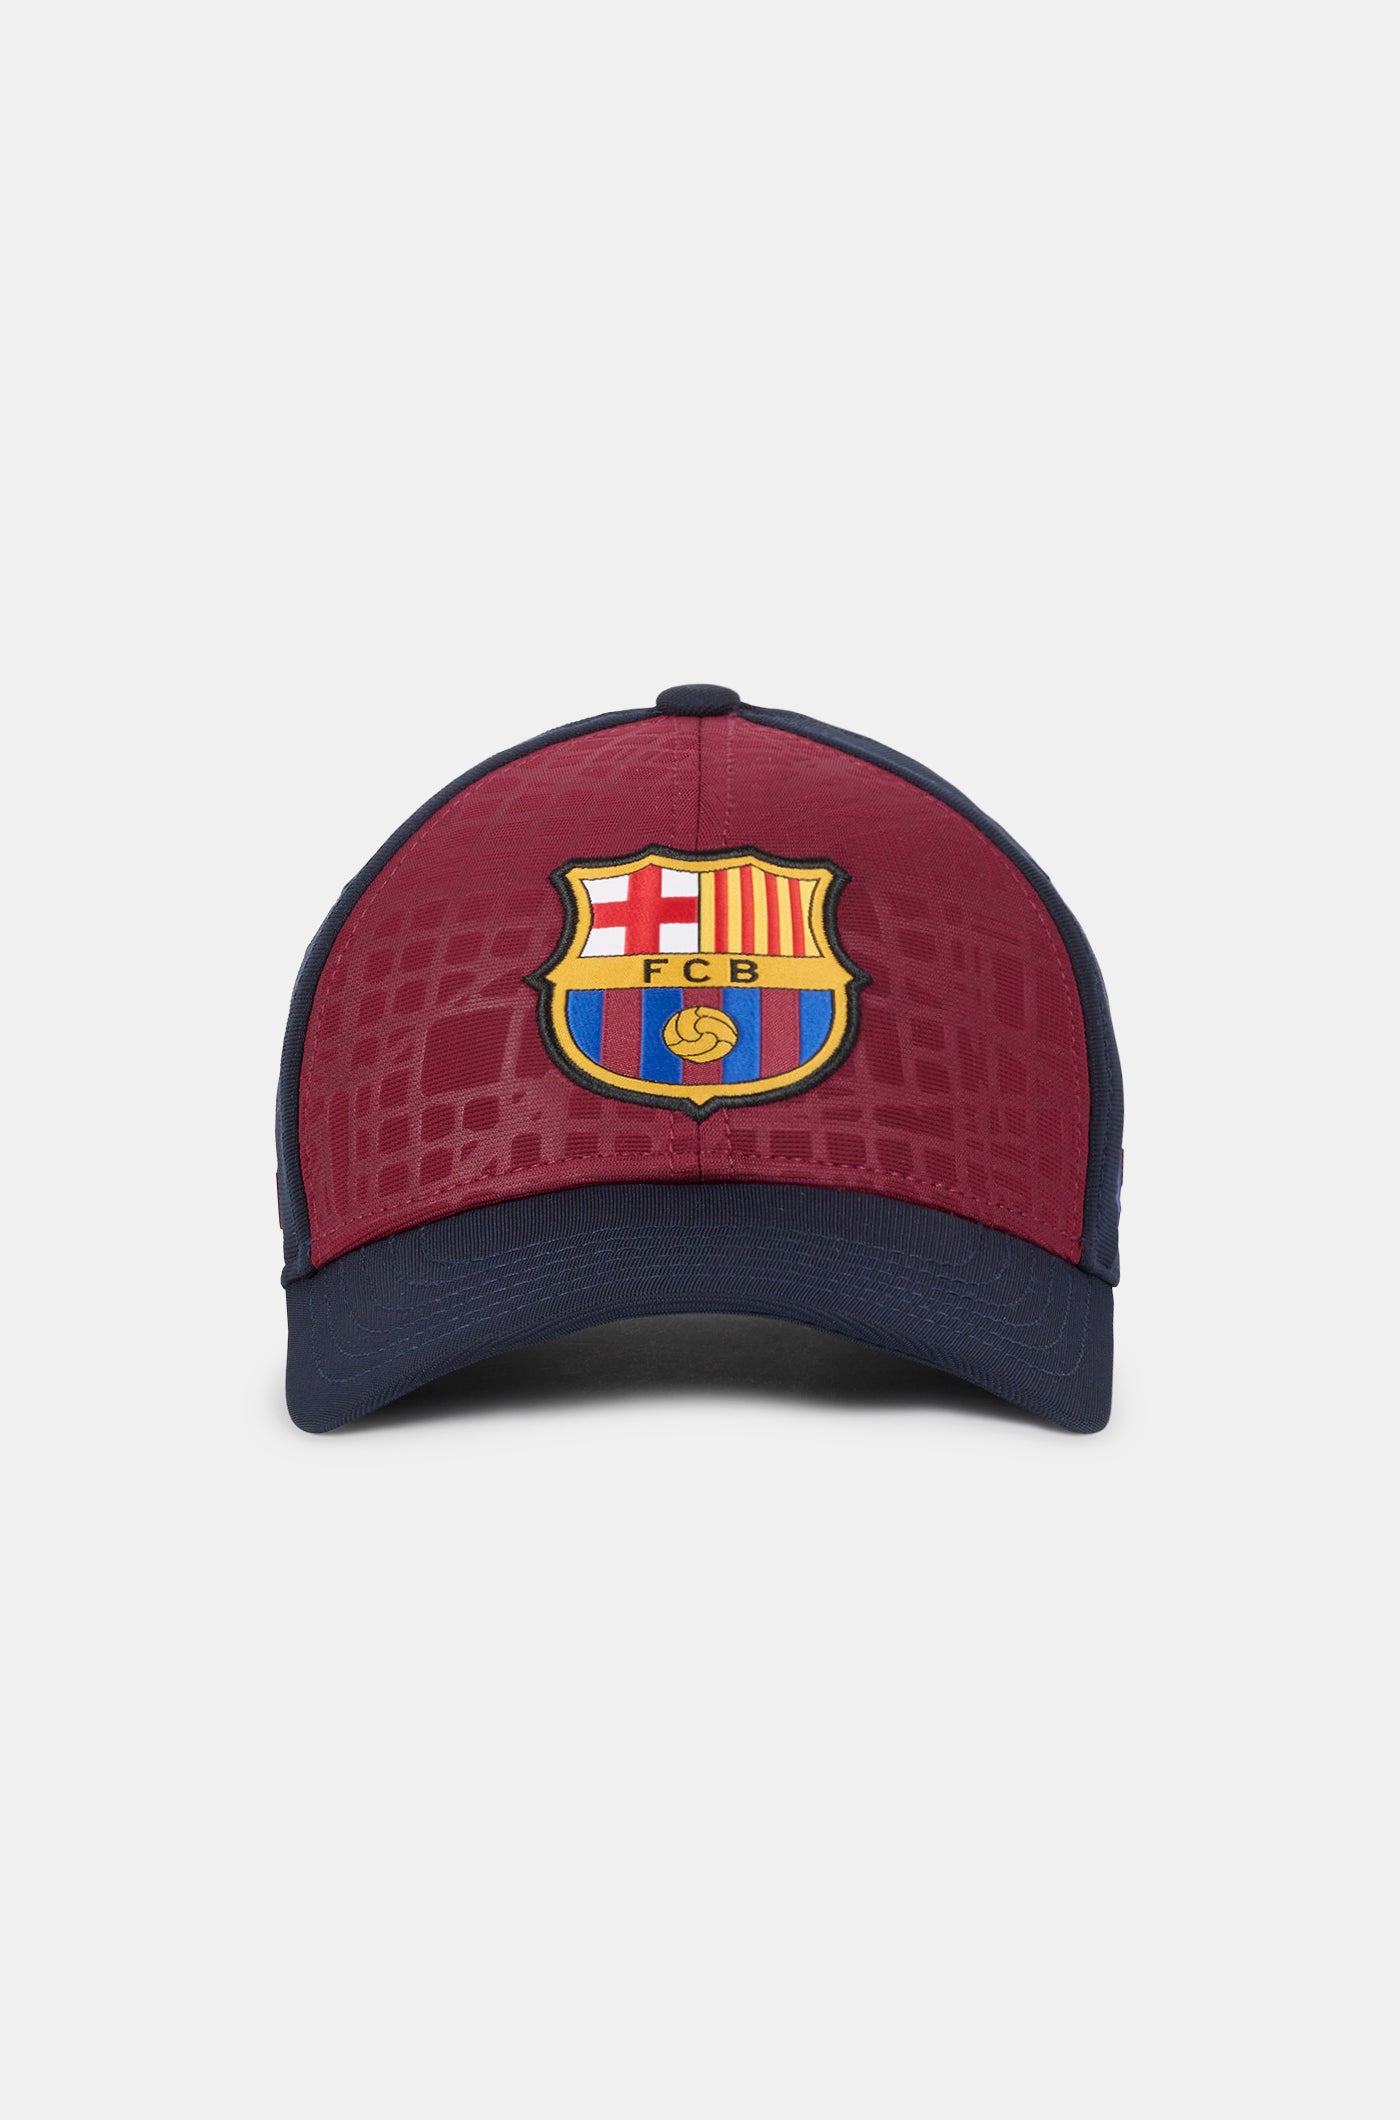 FC Barcelona-Kappe mit Wappen 1899 – Junior